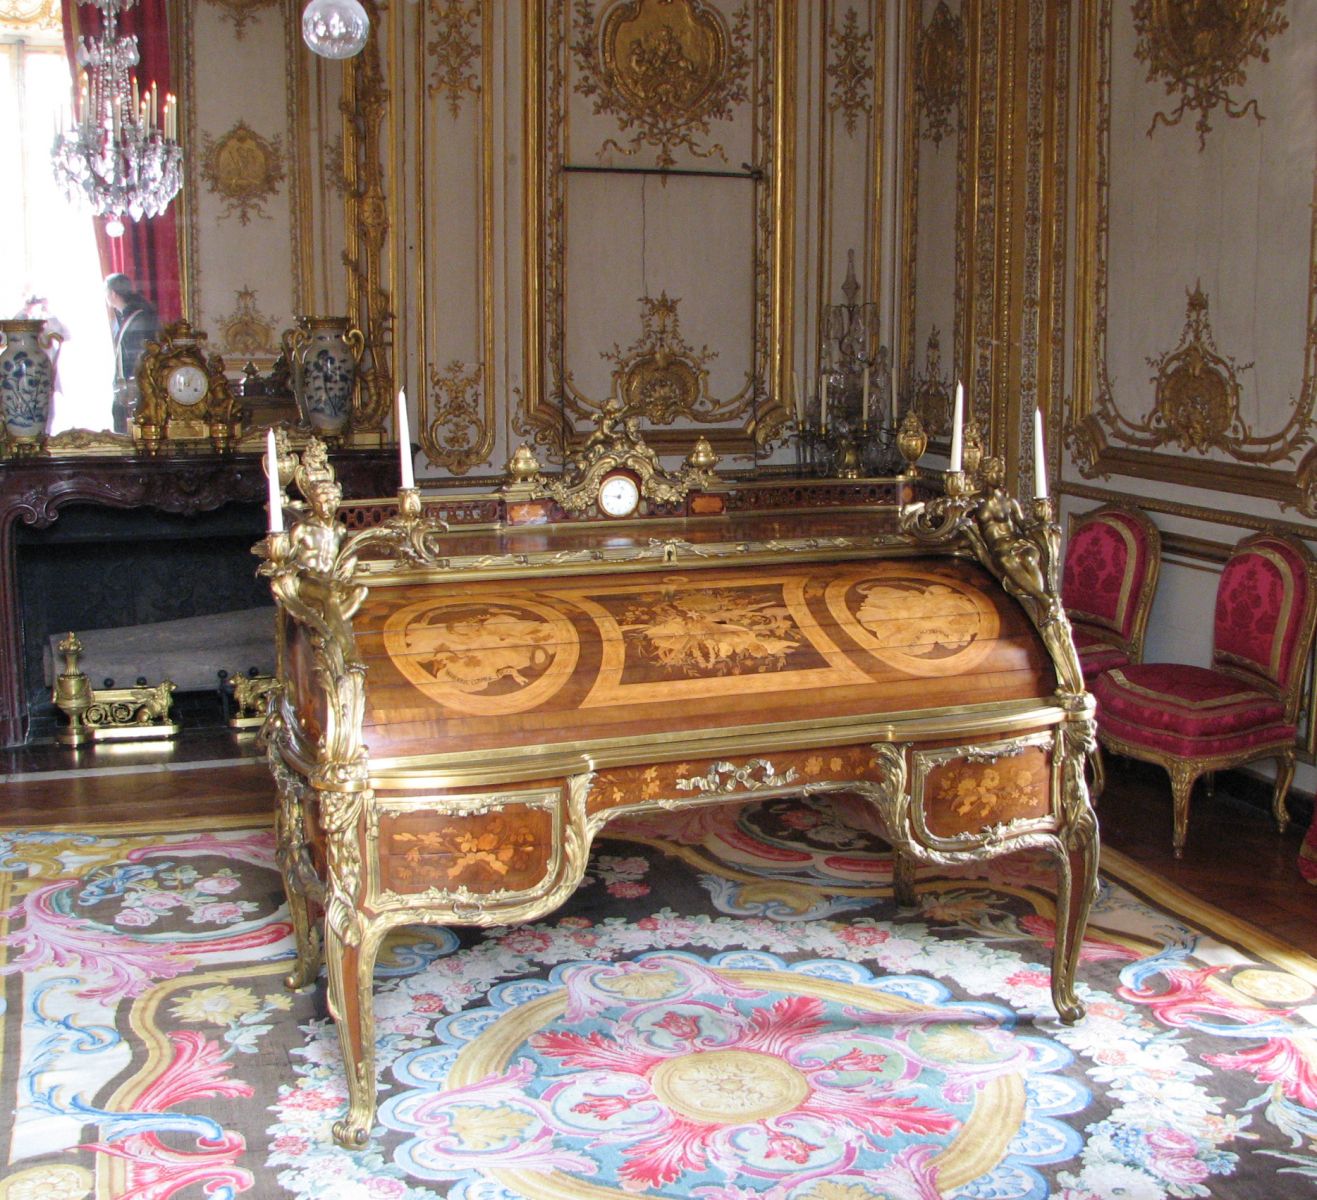 The original Bureau de Roi in the Palace of Versailles